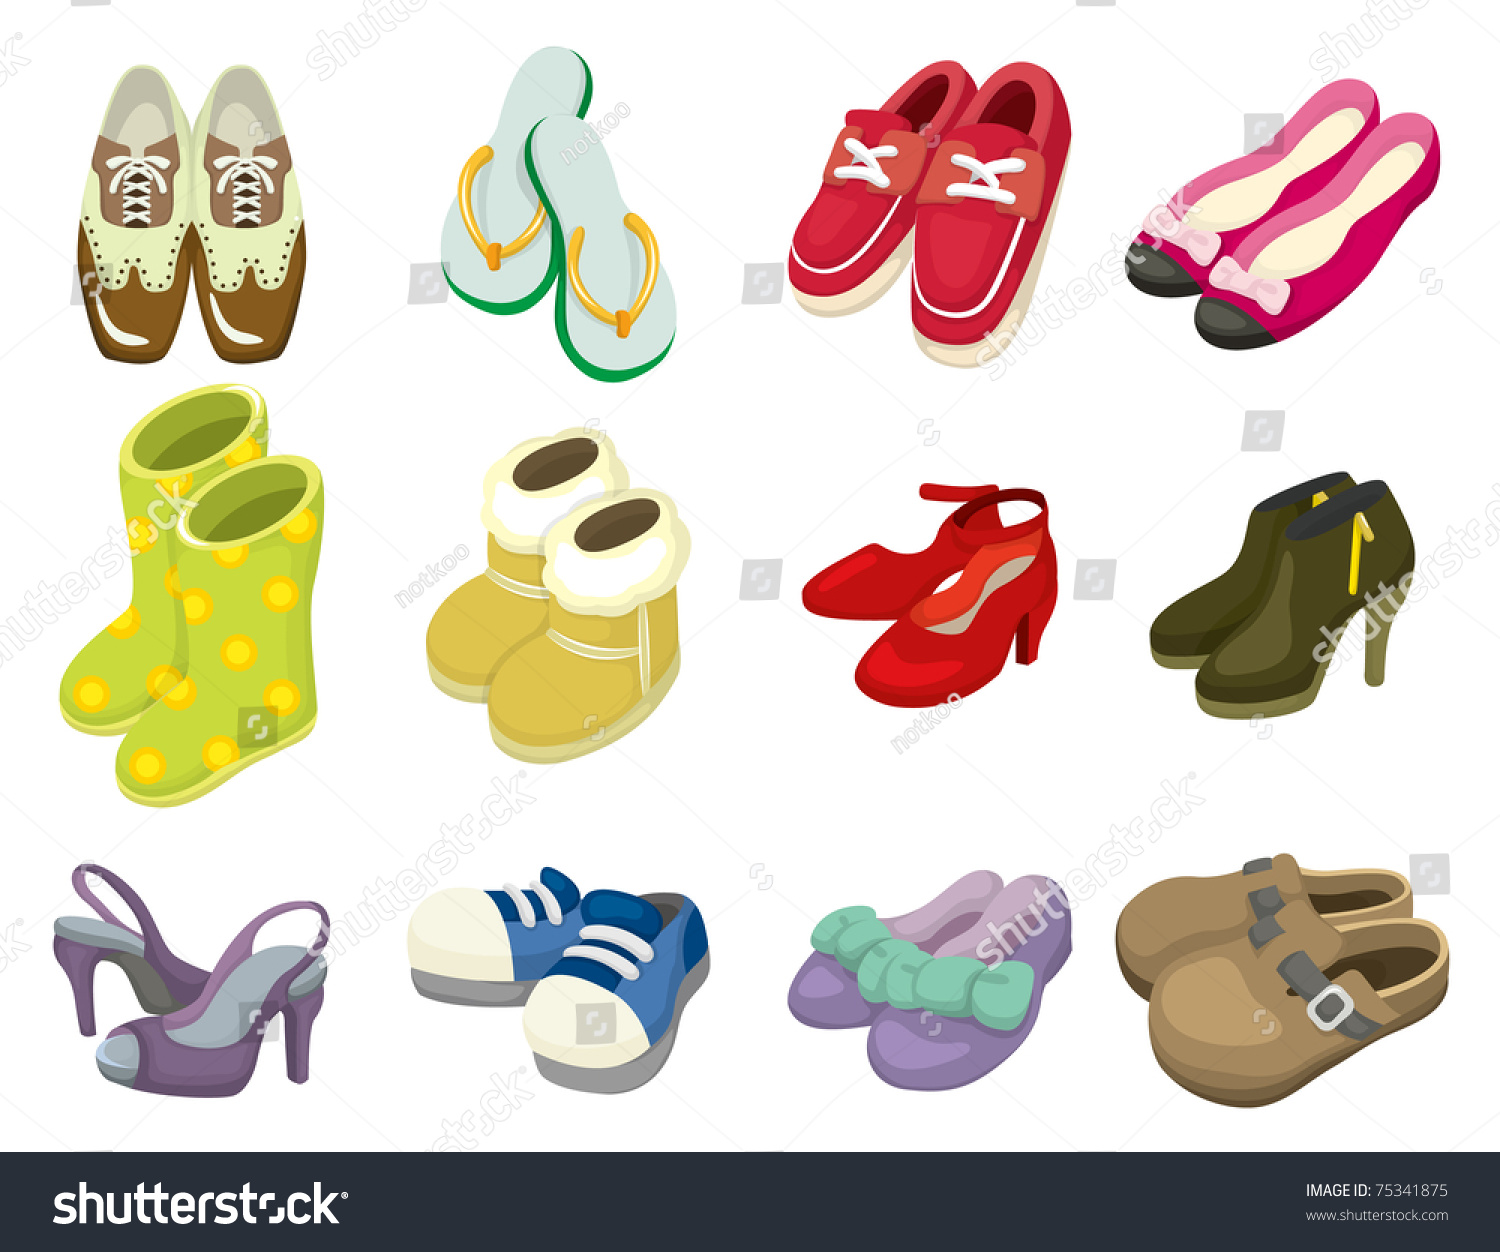 Cartoon Shoes Icon Stock Vector 75341875 - Shutterstock